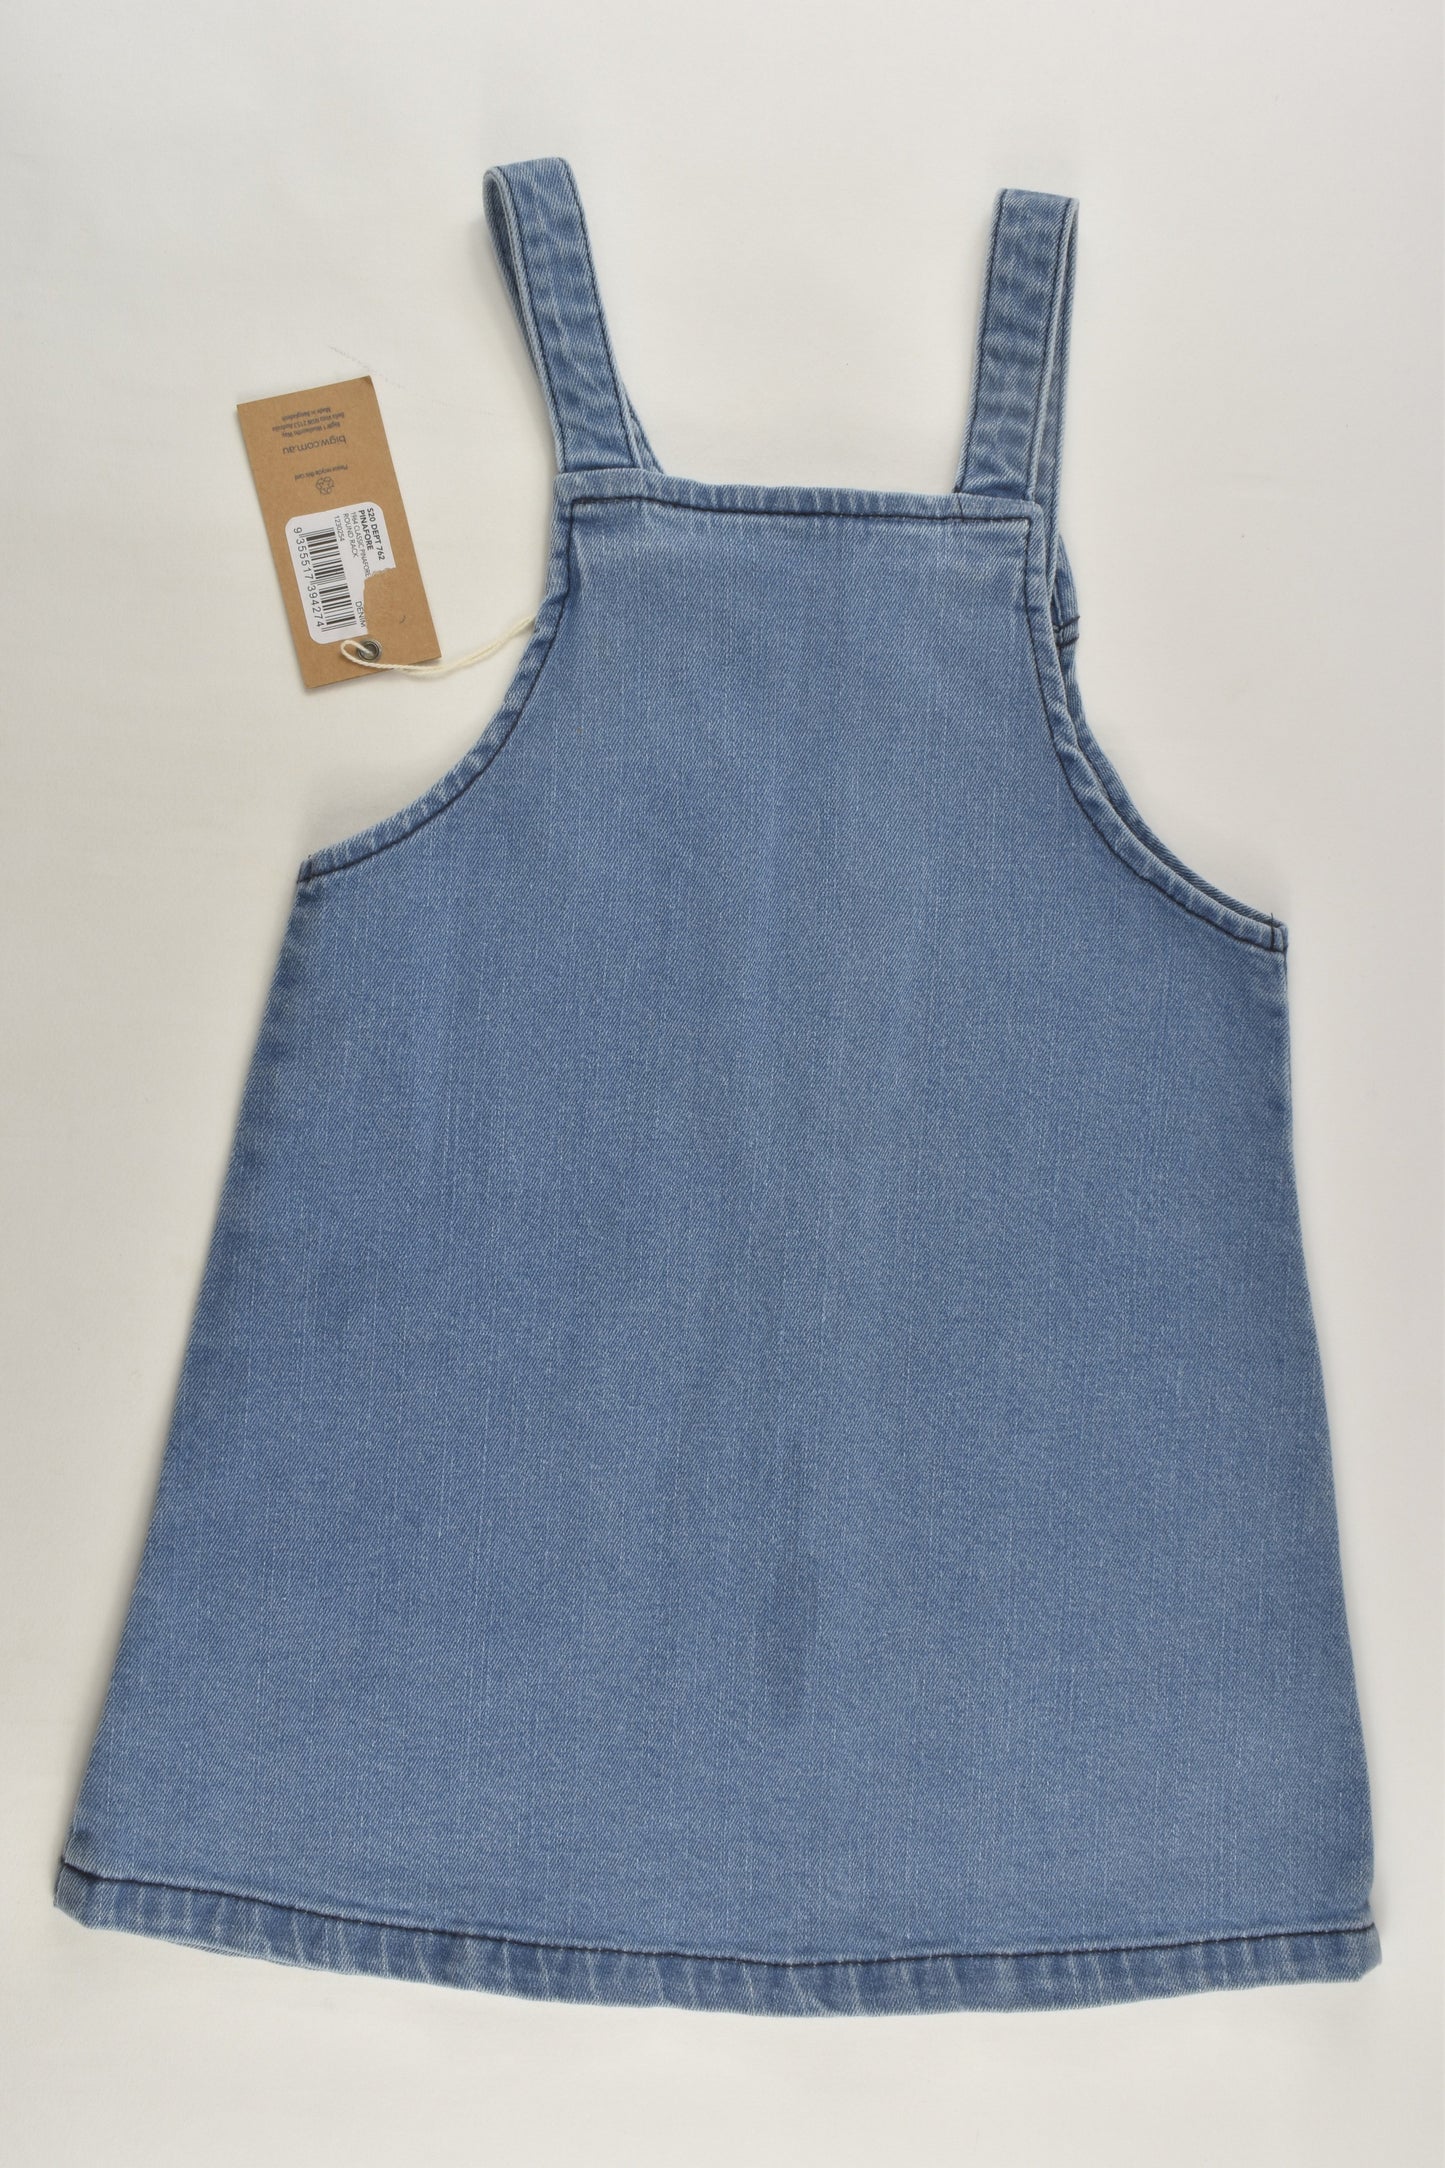 NEW The 1964 Denim Company Size 4 Denim Pinafore Dress